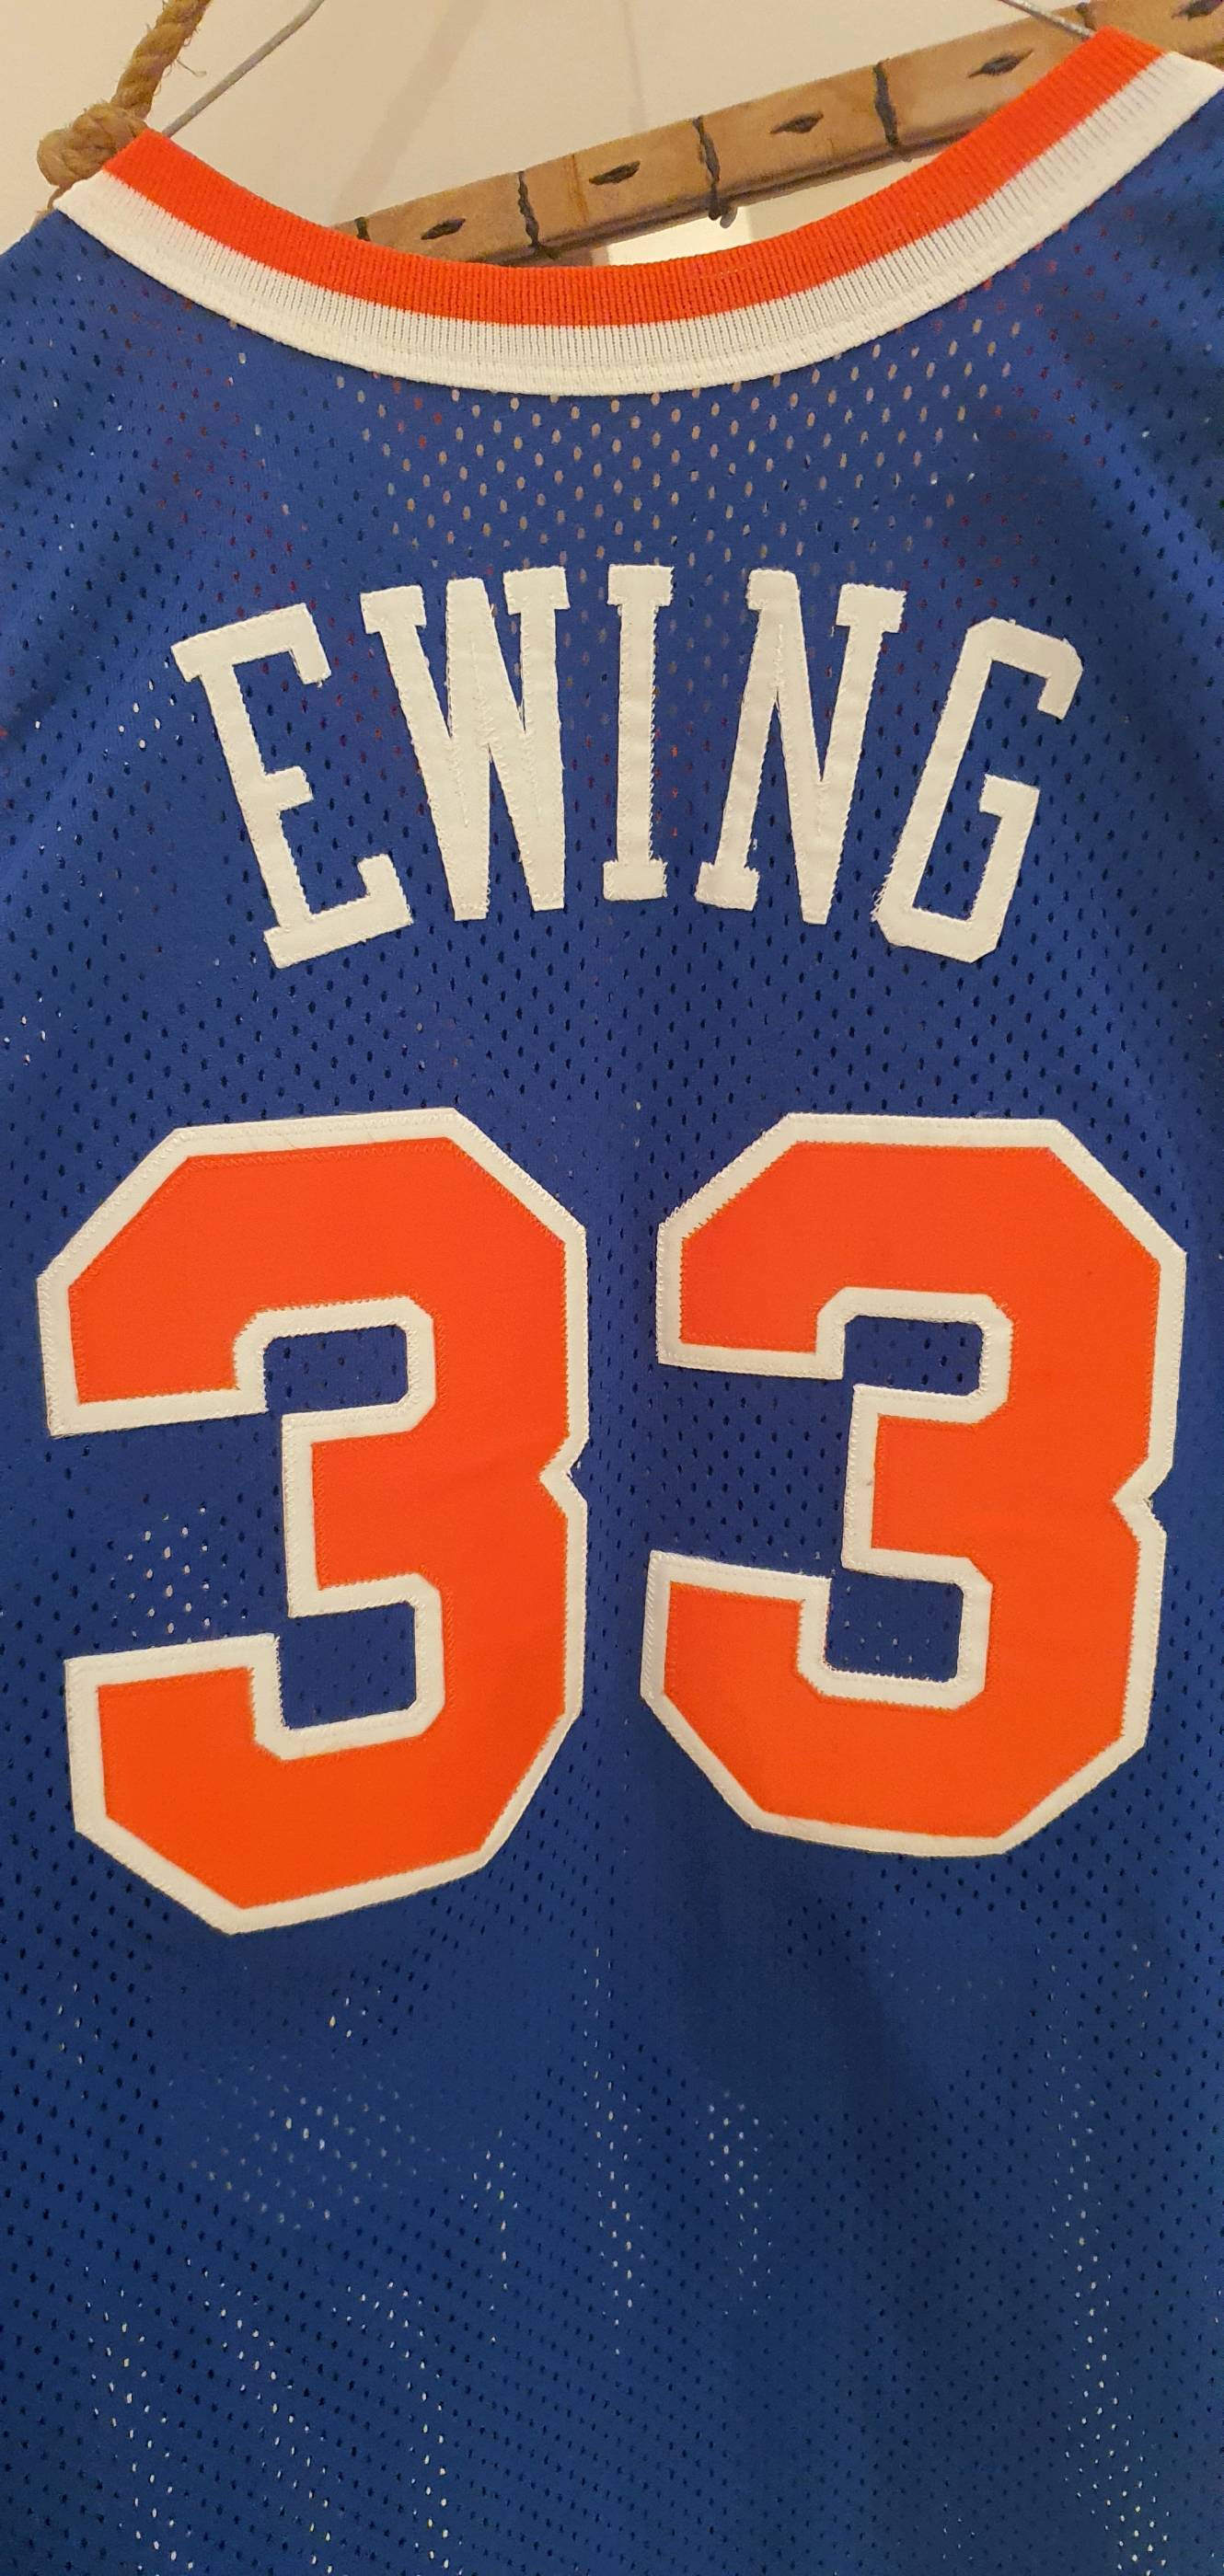 Patrick Ewing 1998 Auth New York Knicks Jersey